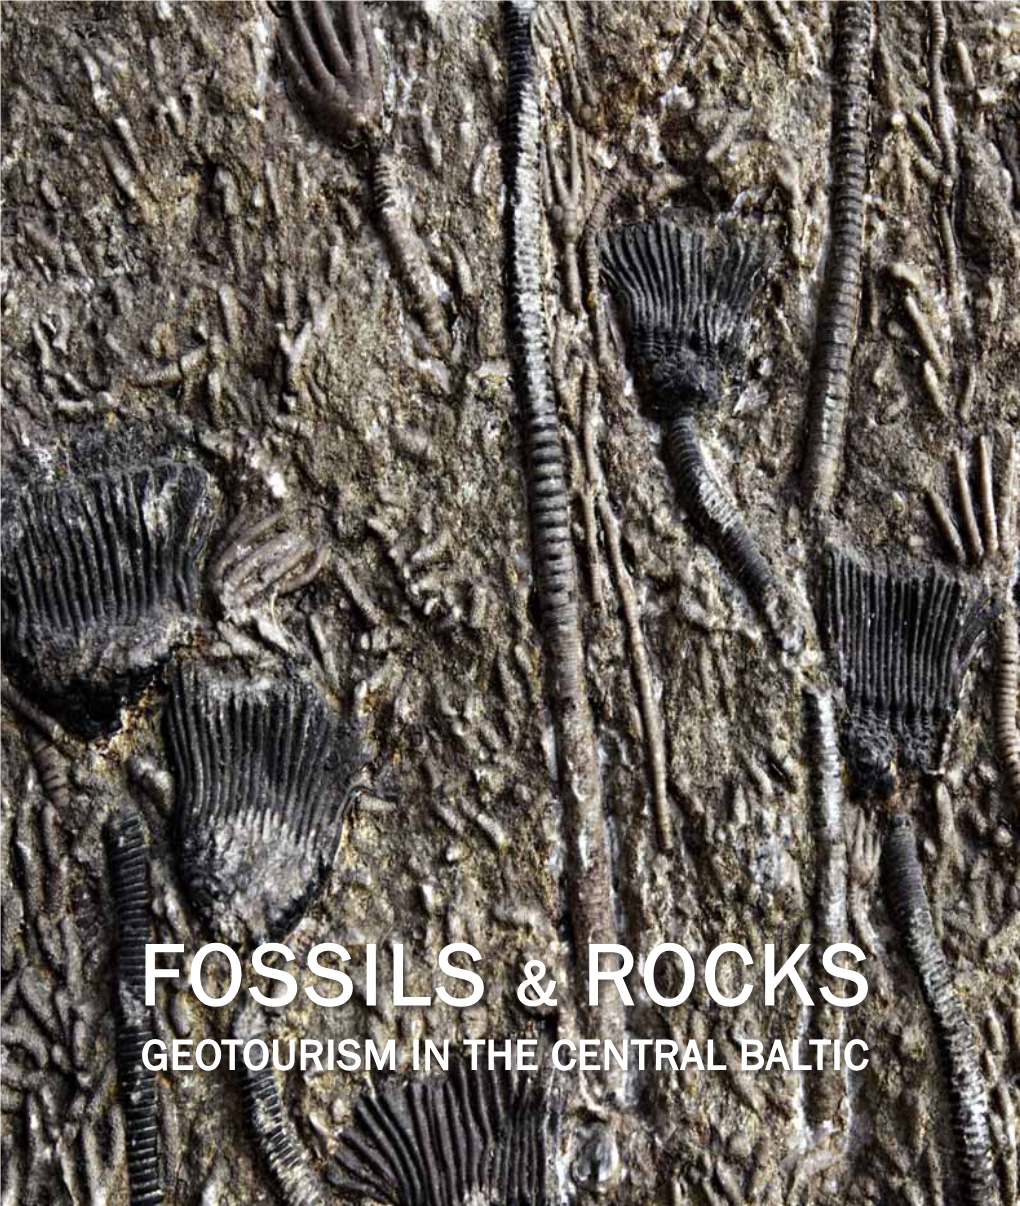 Fossils &Rocks